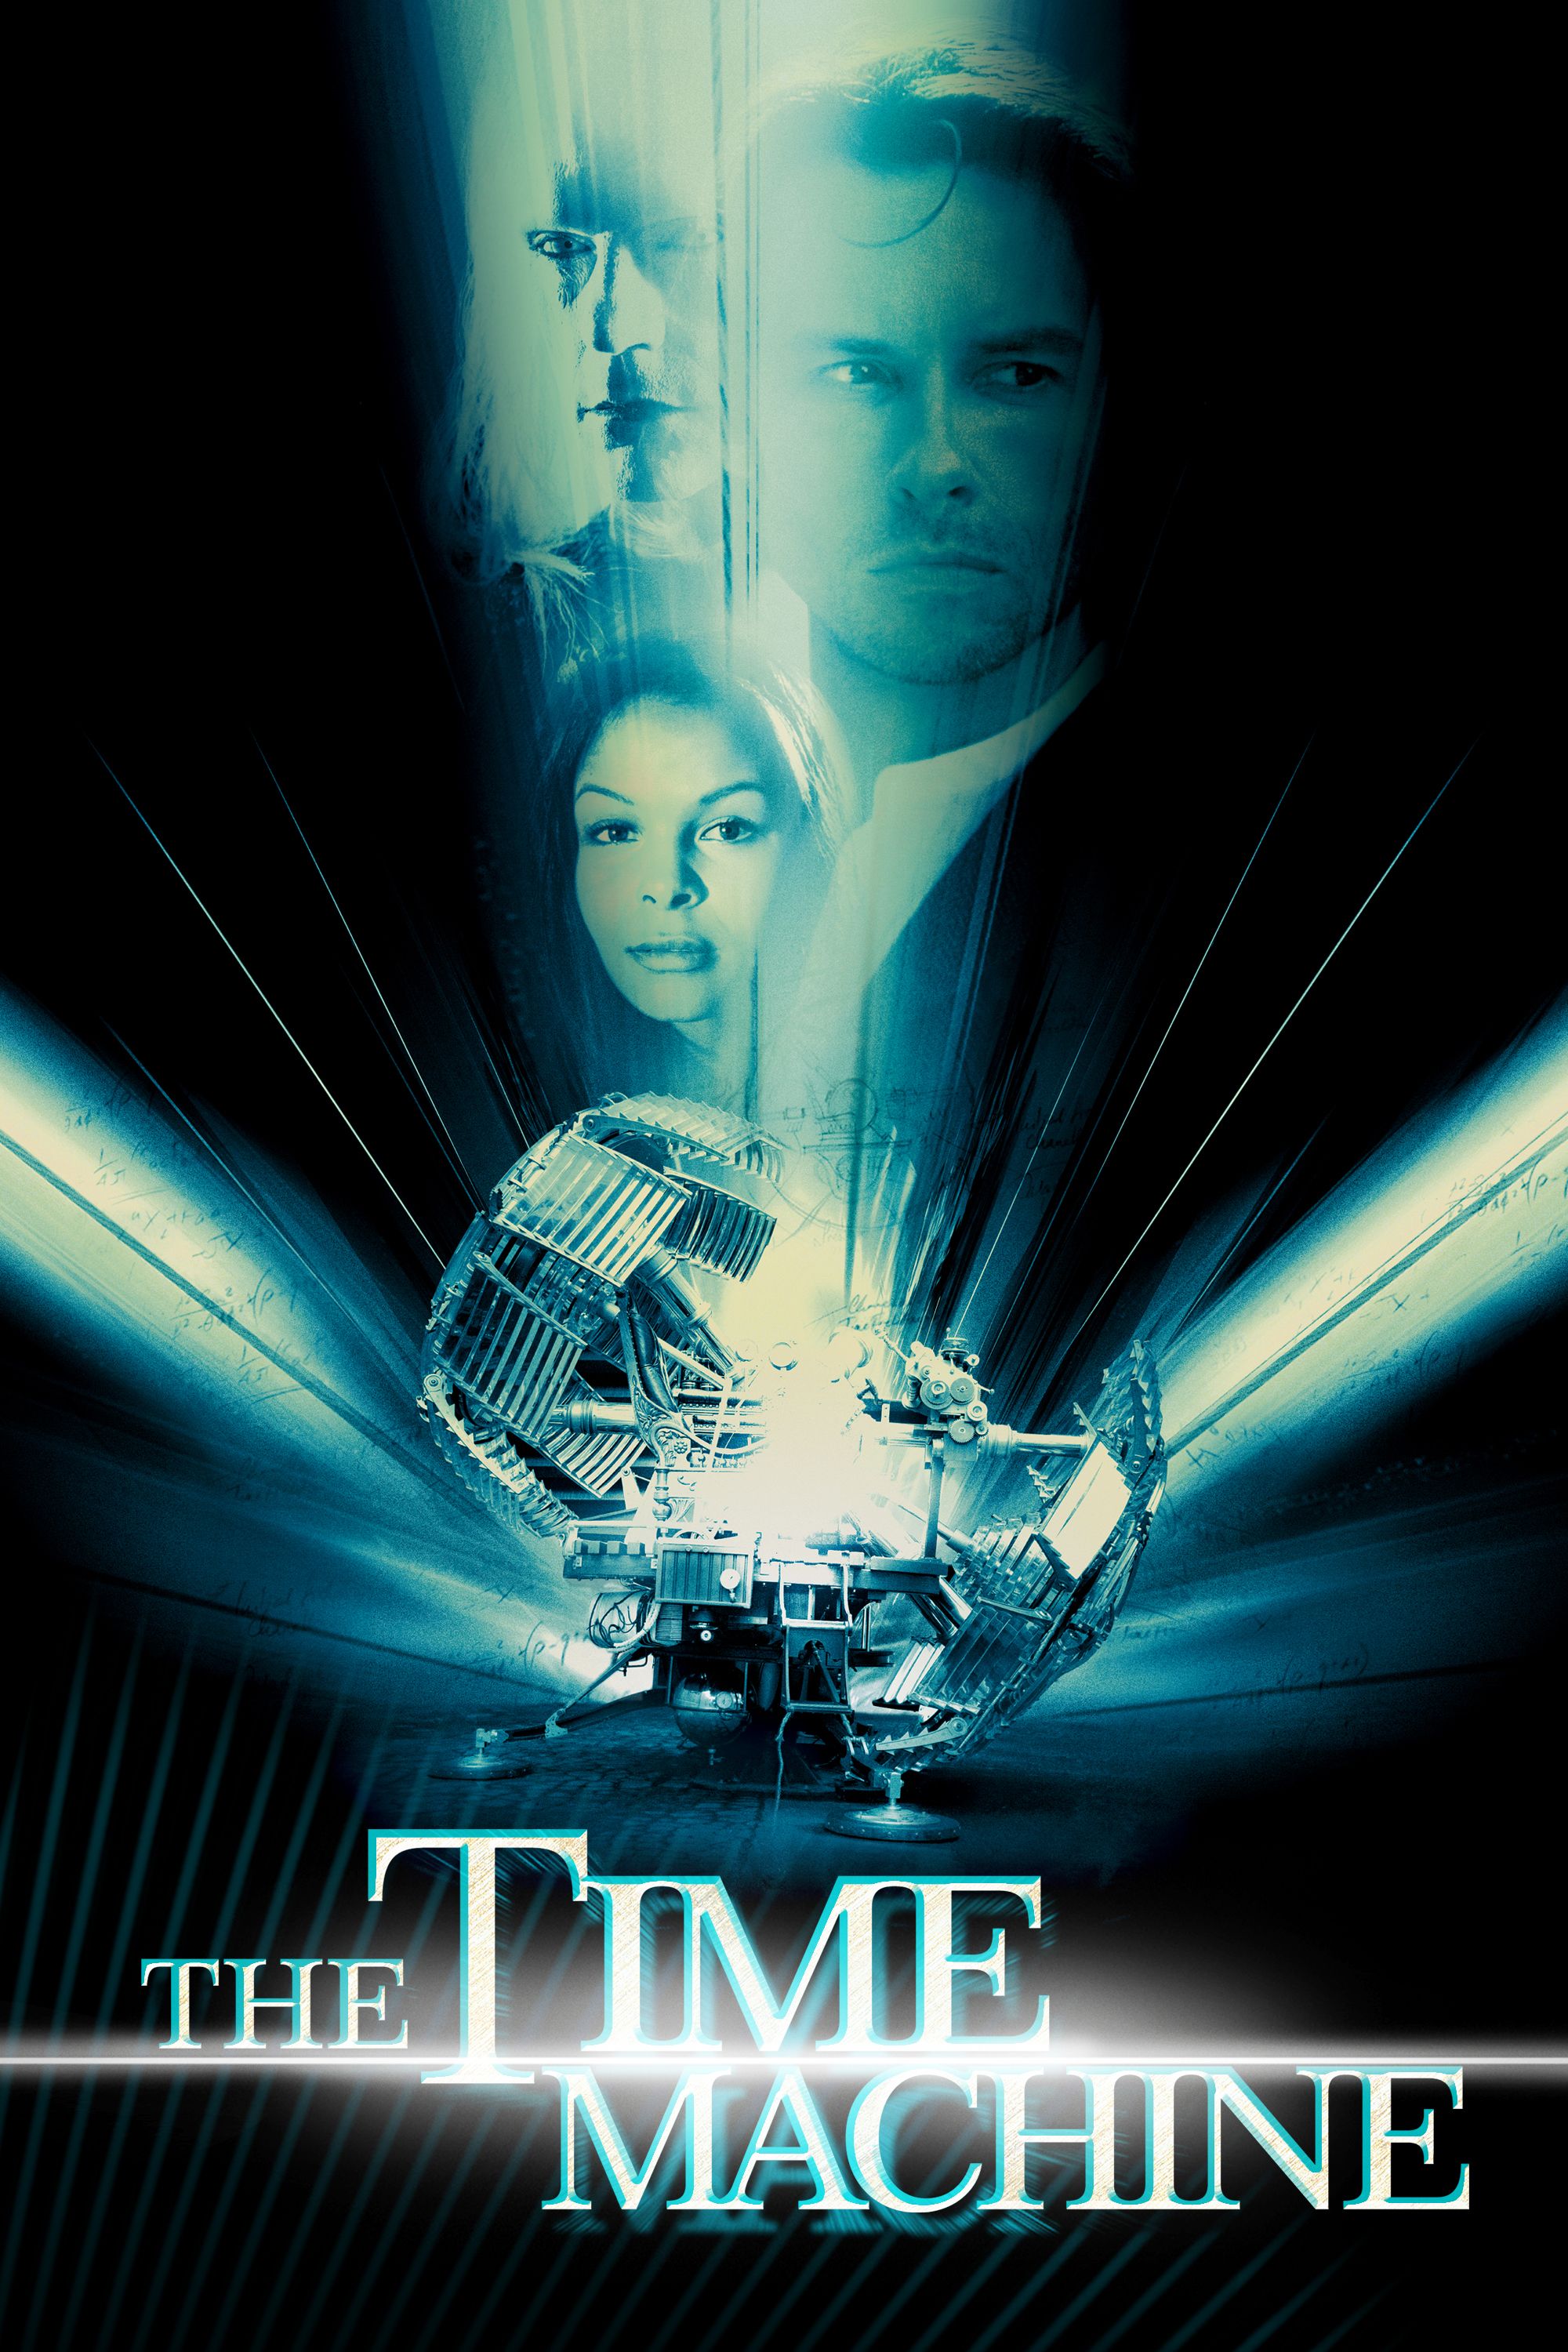 time traveler movie